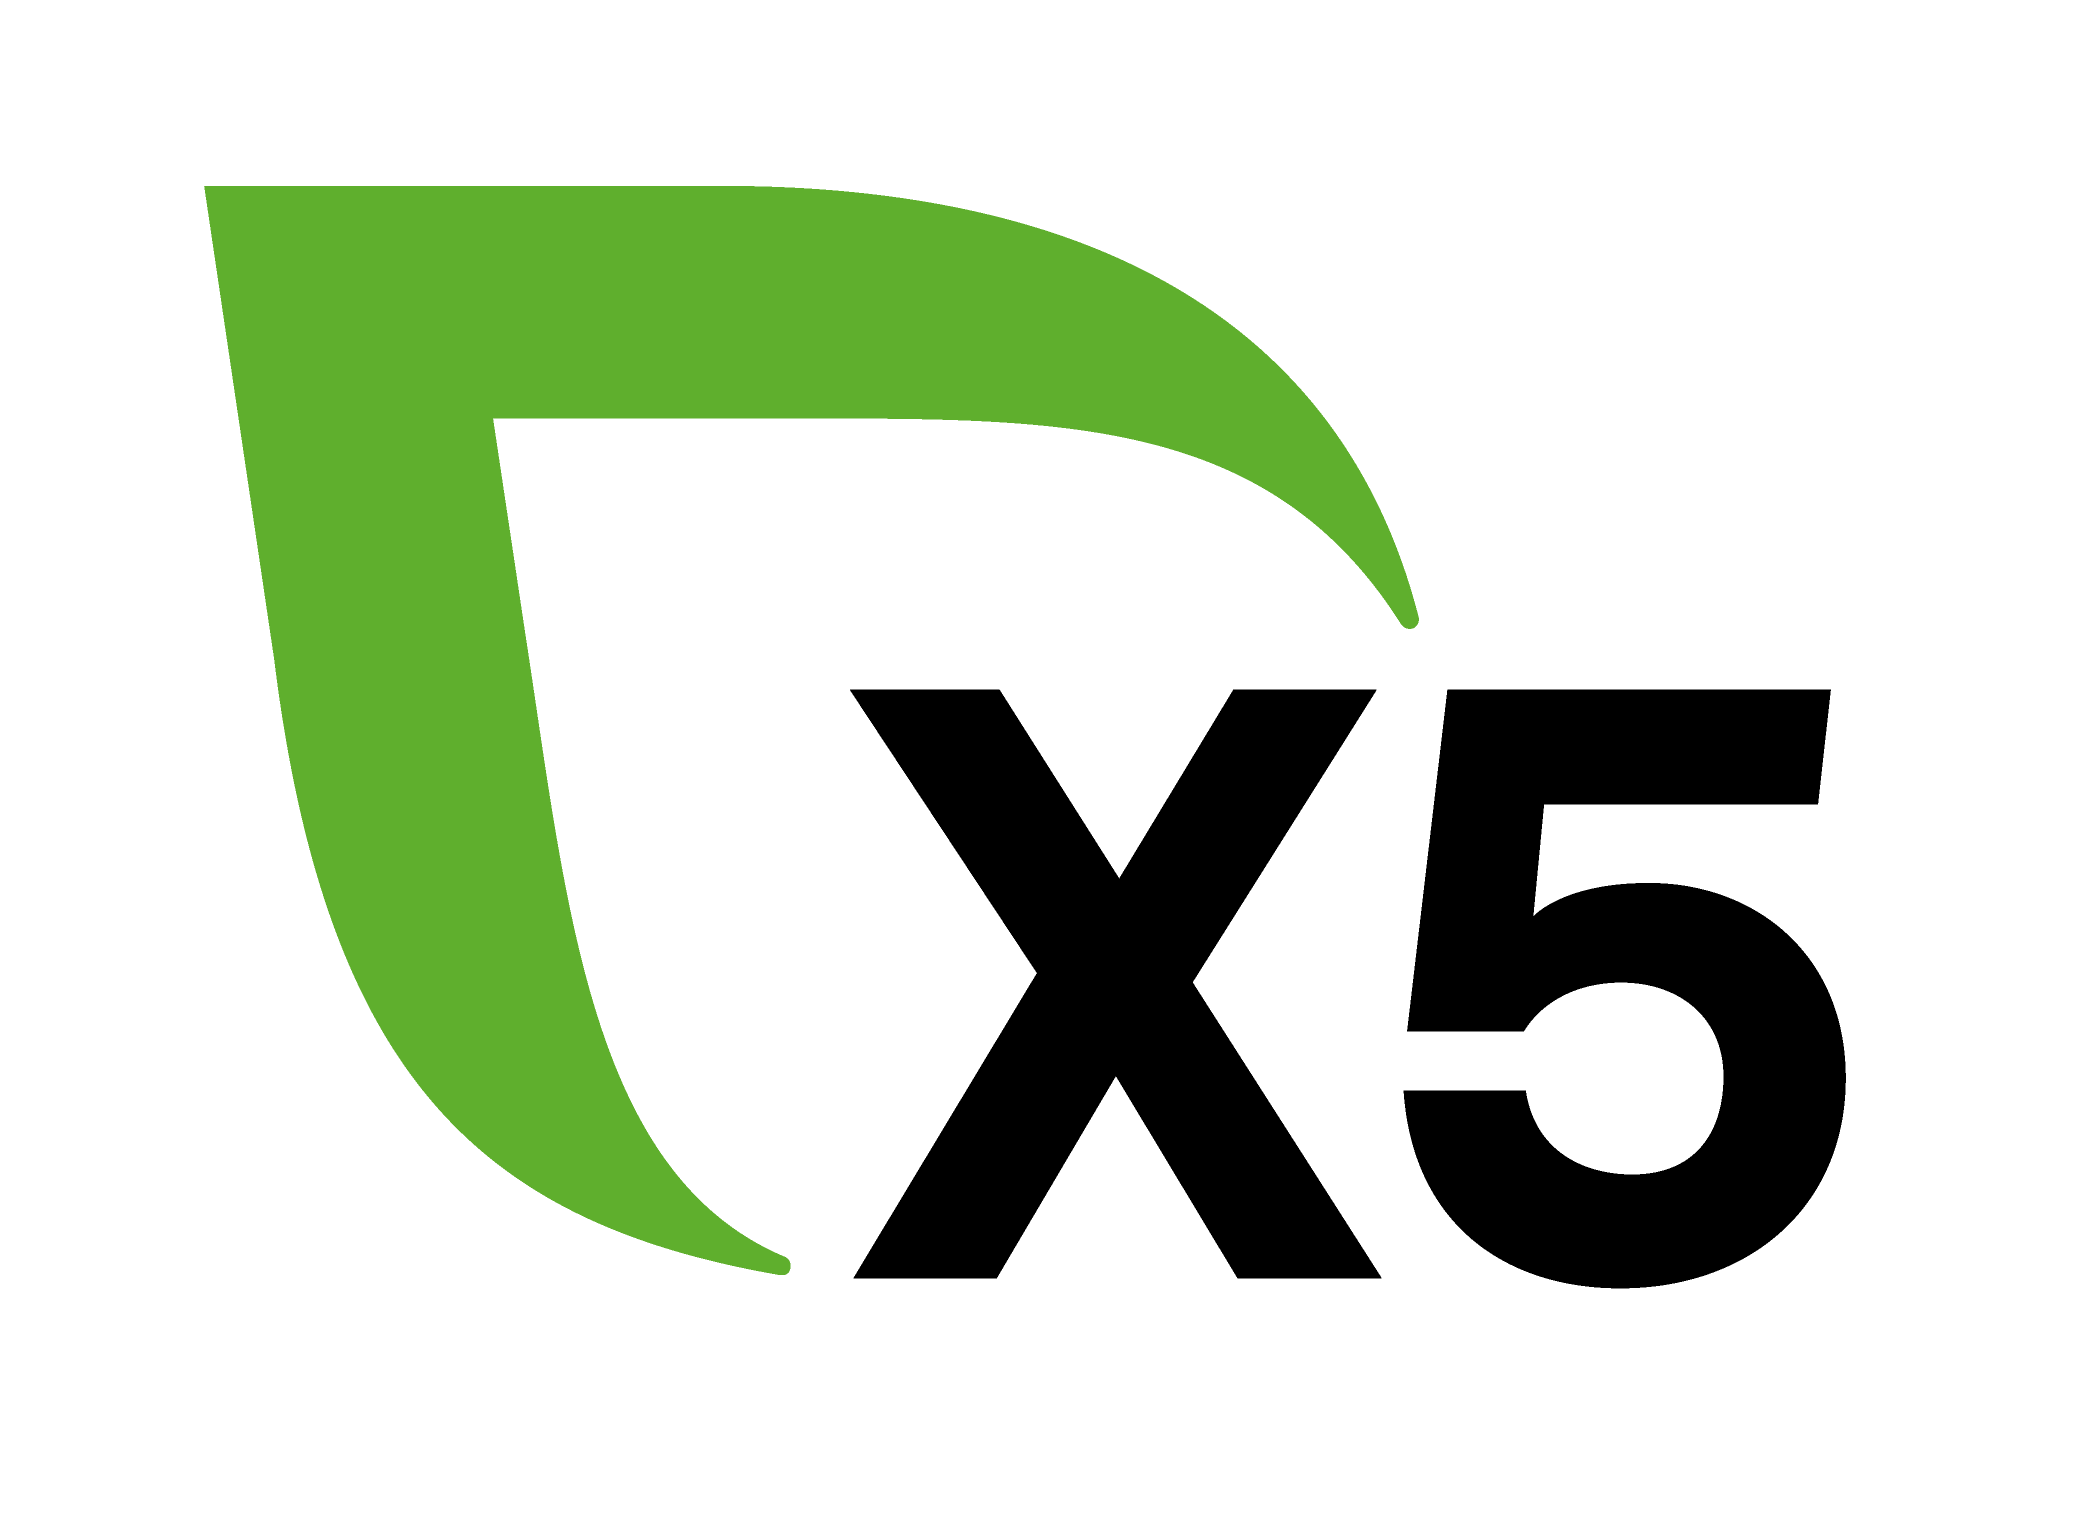 Нова групп сайт. Логотип x5 Ритейл групп. X5 Retail Group новый логотип. X5 Group новый логотип. Группа x5 Retail Group.